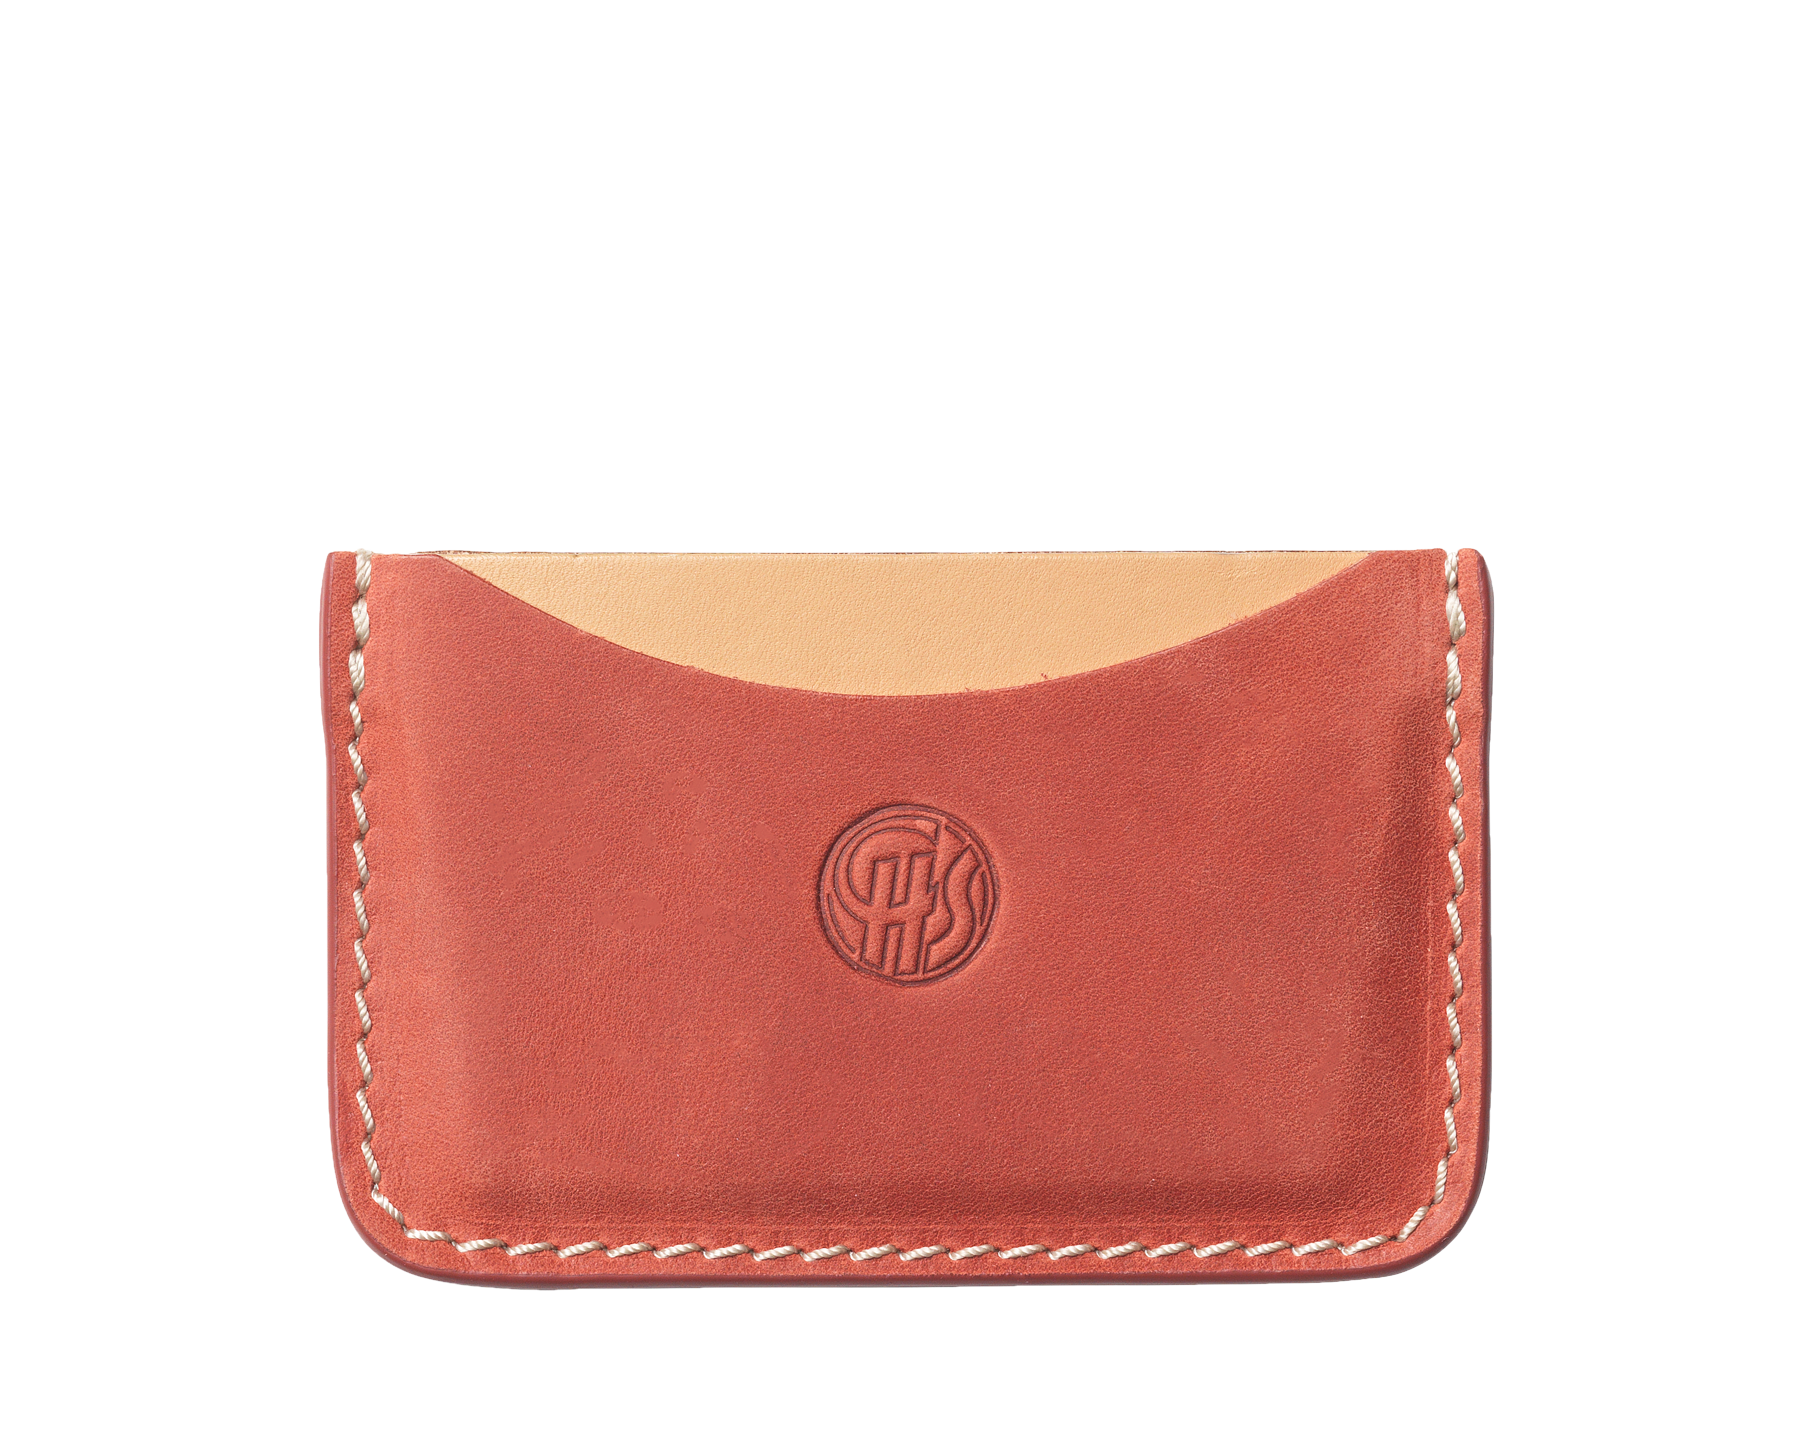 Color: C2 Gimax Card & ID Holders Credit Card Holder Women Split Leather Fashion Solid Hasp Purse Bag Wallet for Credit Cards Vintage New Arrival 